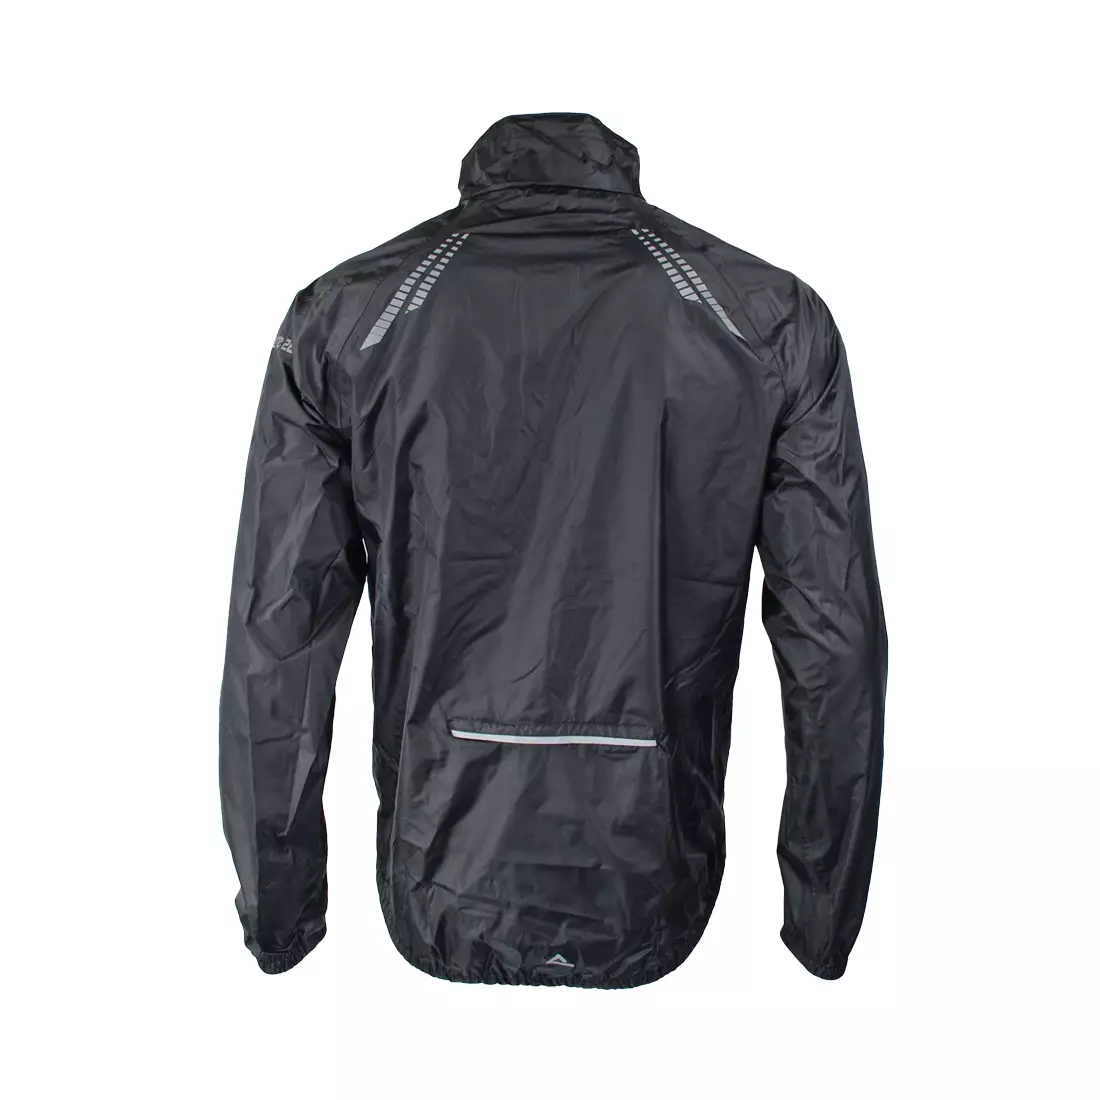 DARE 2B - AQ-LITE JACKET DMW063 - ultralehká cyklistická bunda, barva: Černá